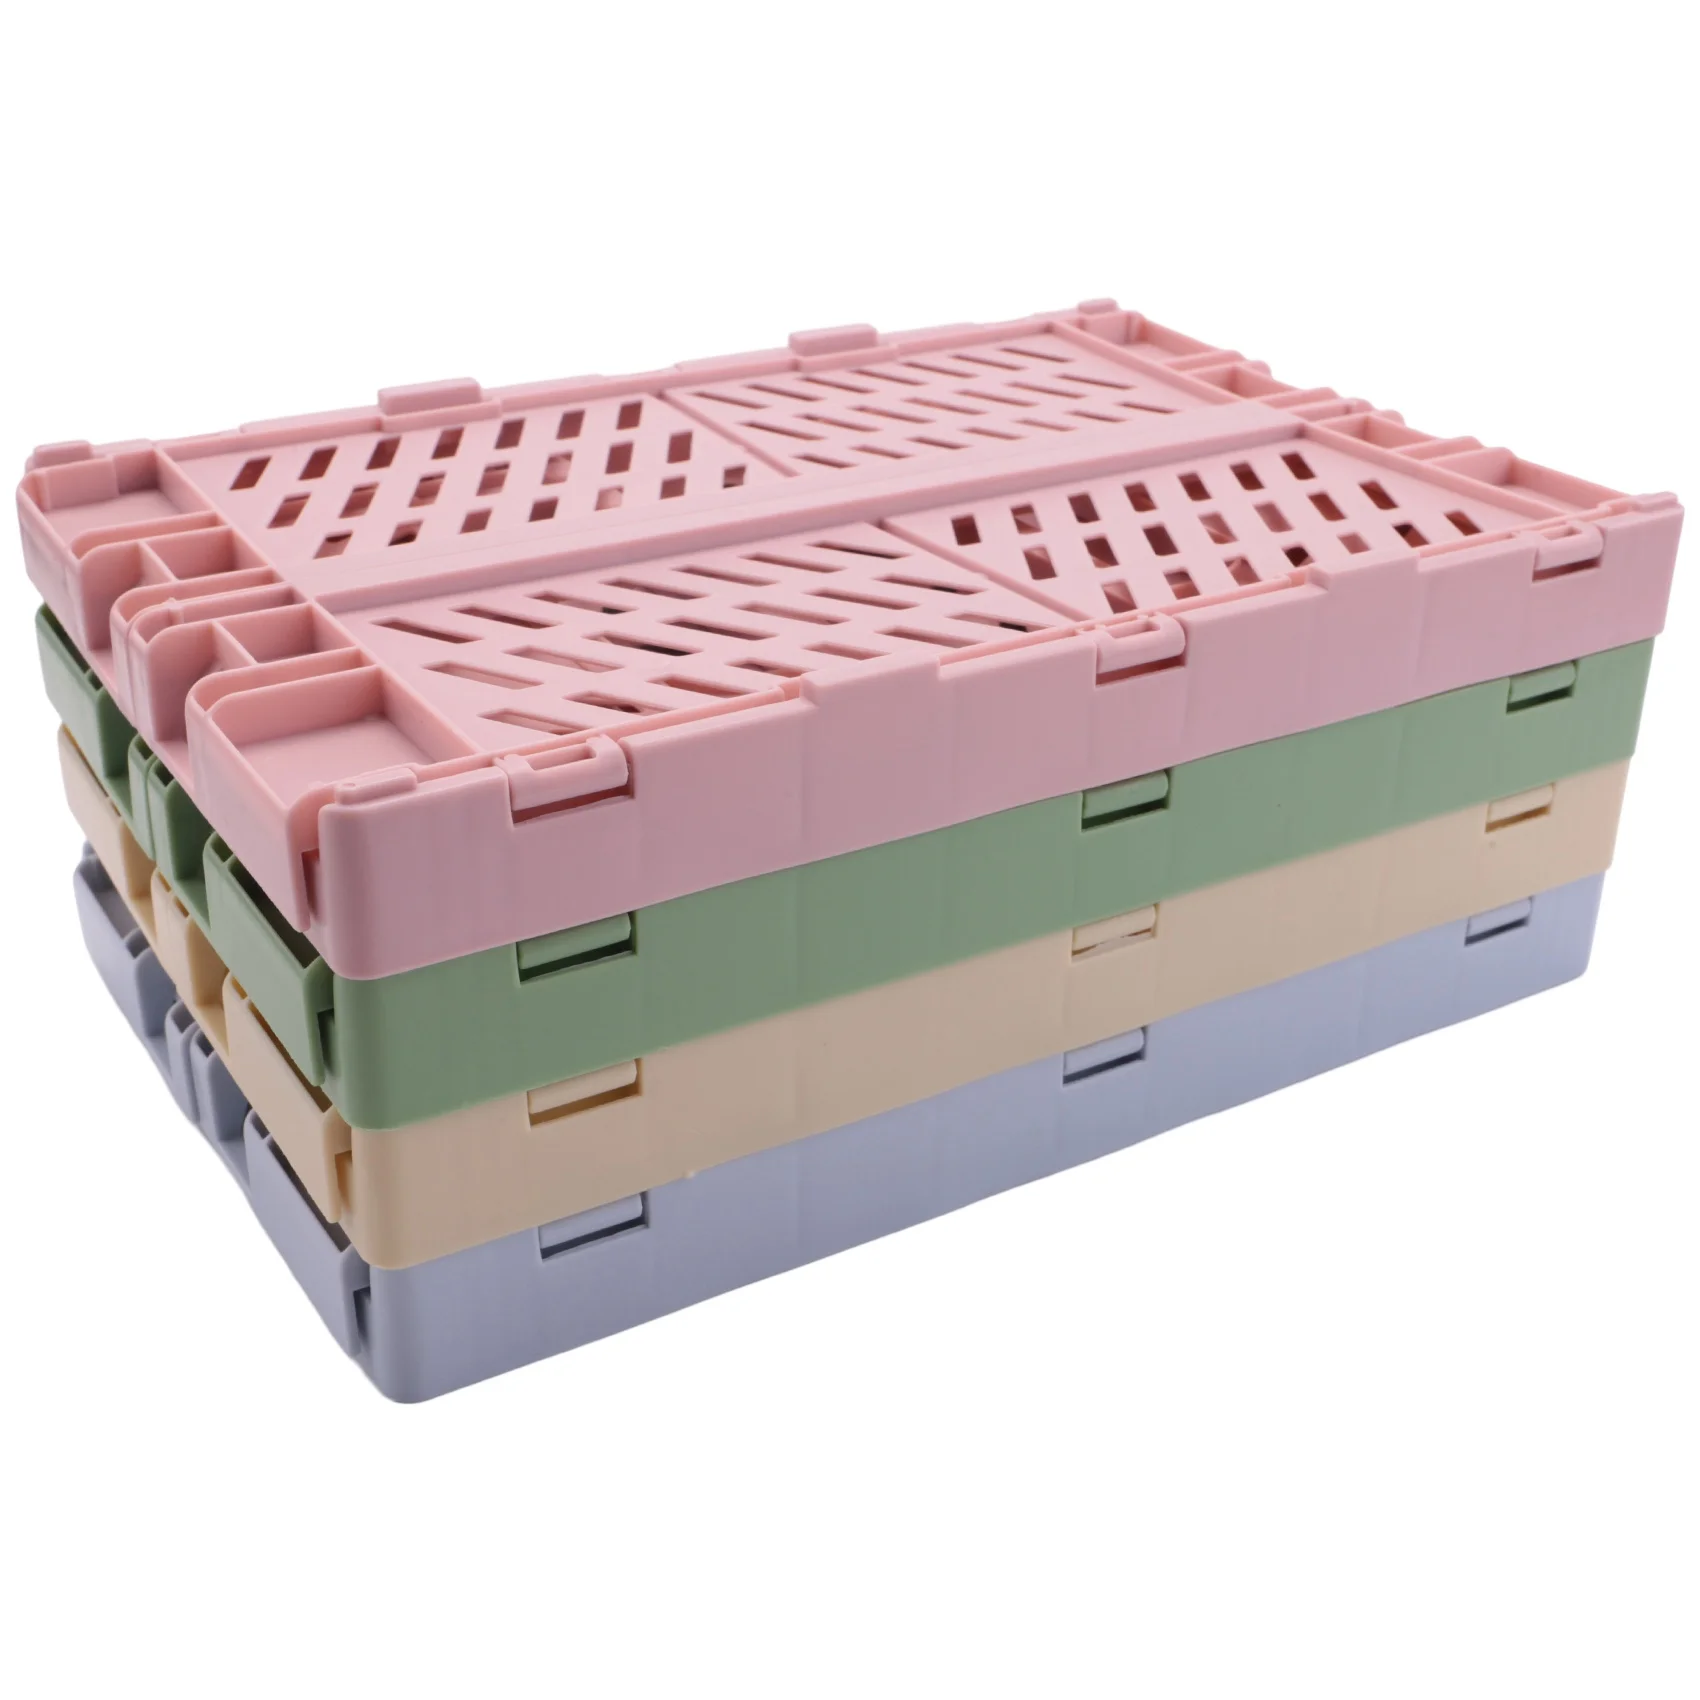 

4Pcs Collapsible Basket Folding Storage Box Crate Plastic Container Durable Transportable Foldable Basket Random Colours